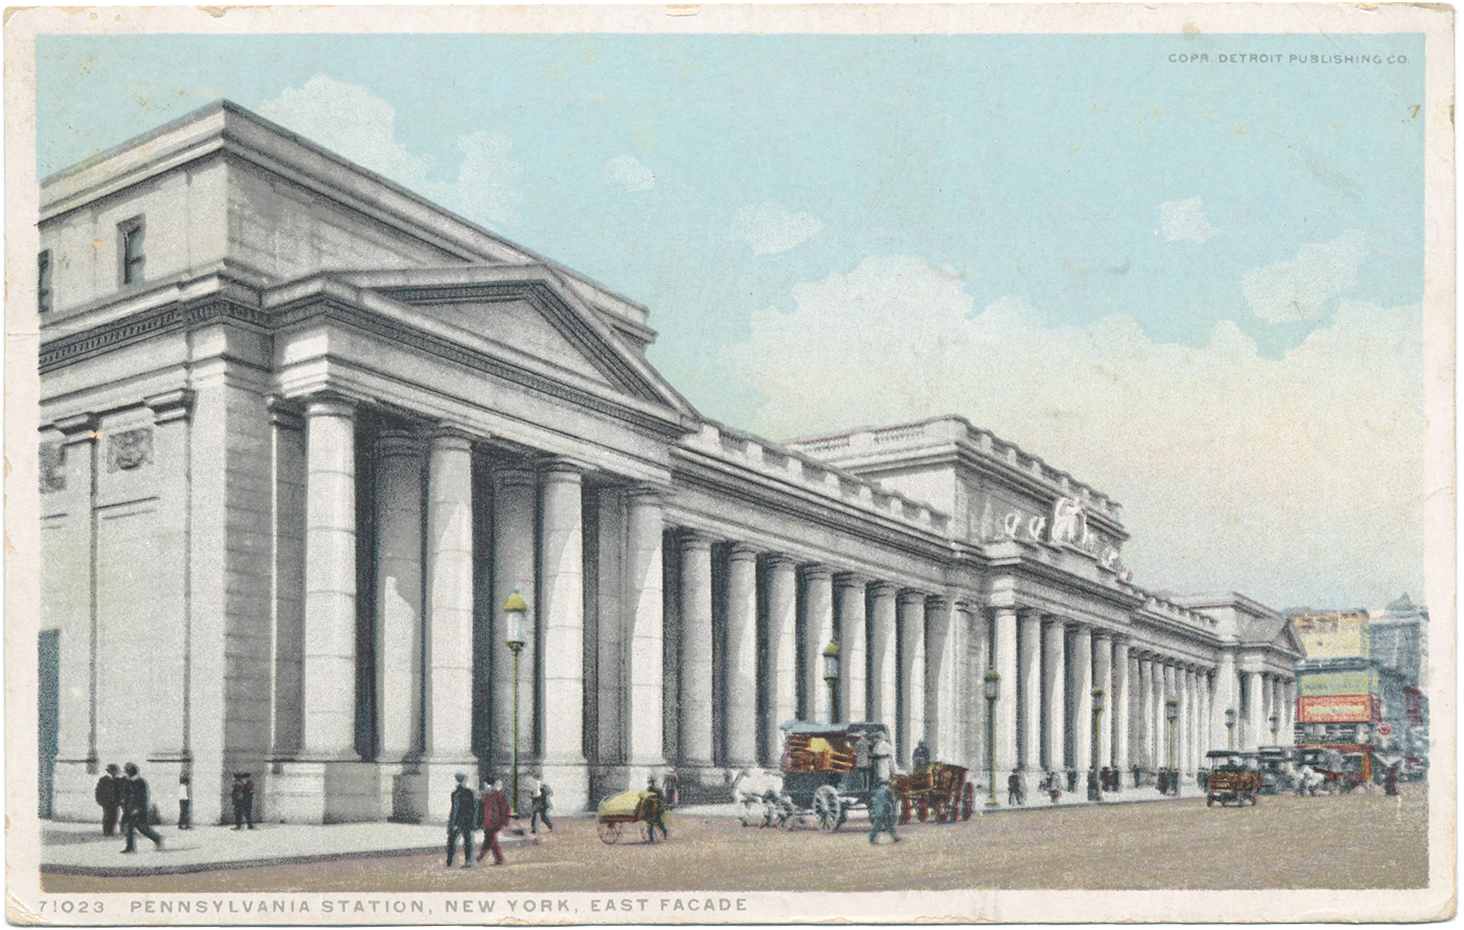 Color version of original Penn Station in New York.